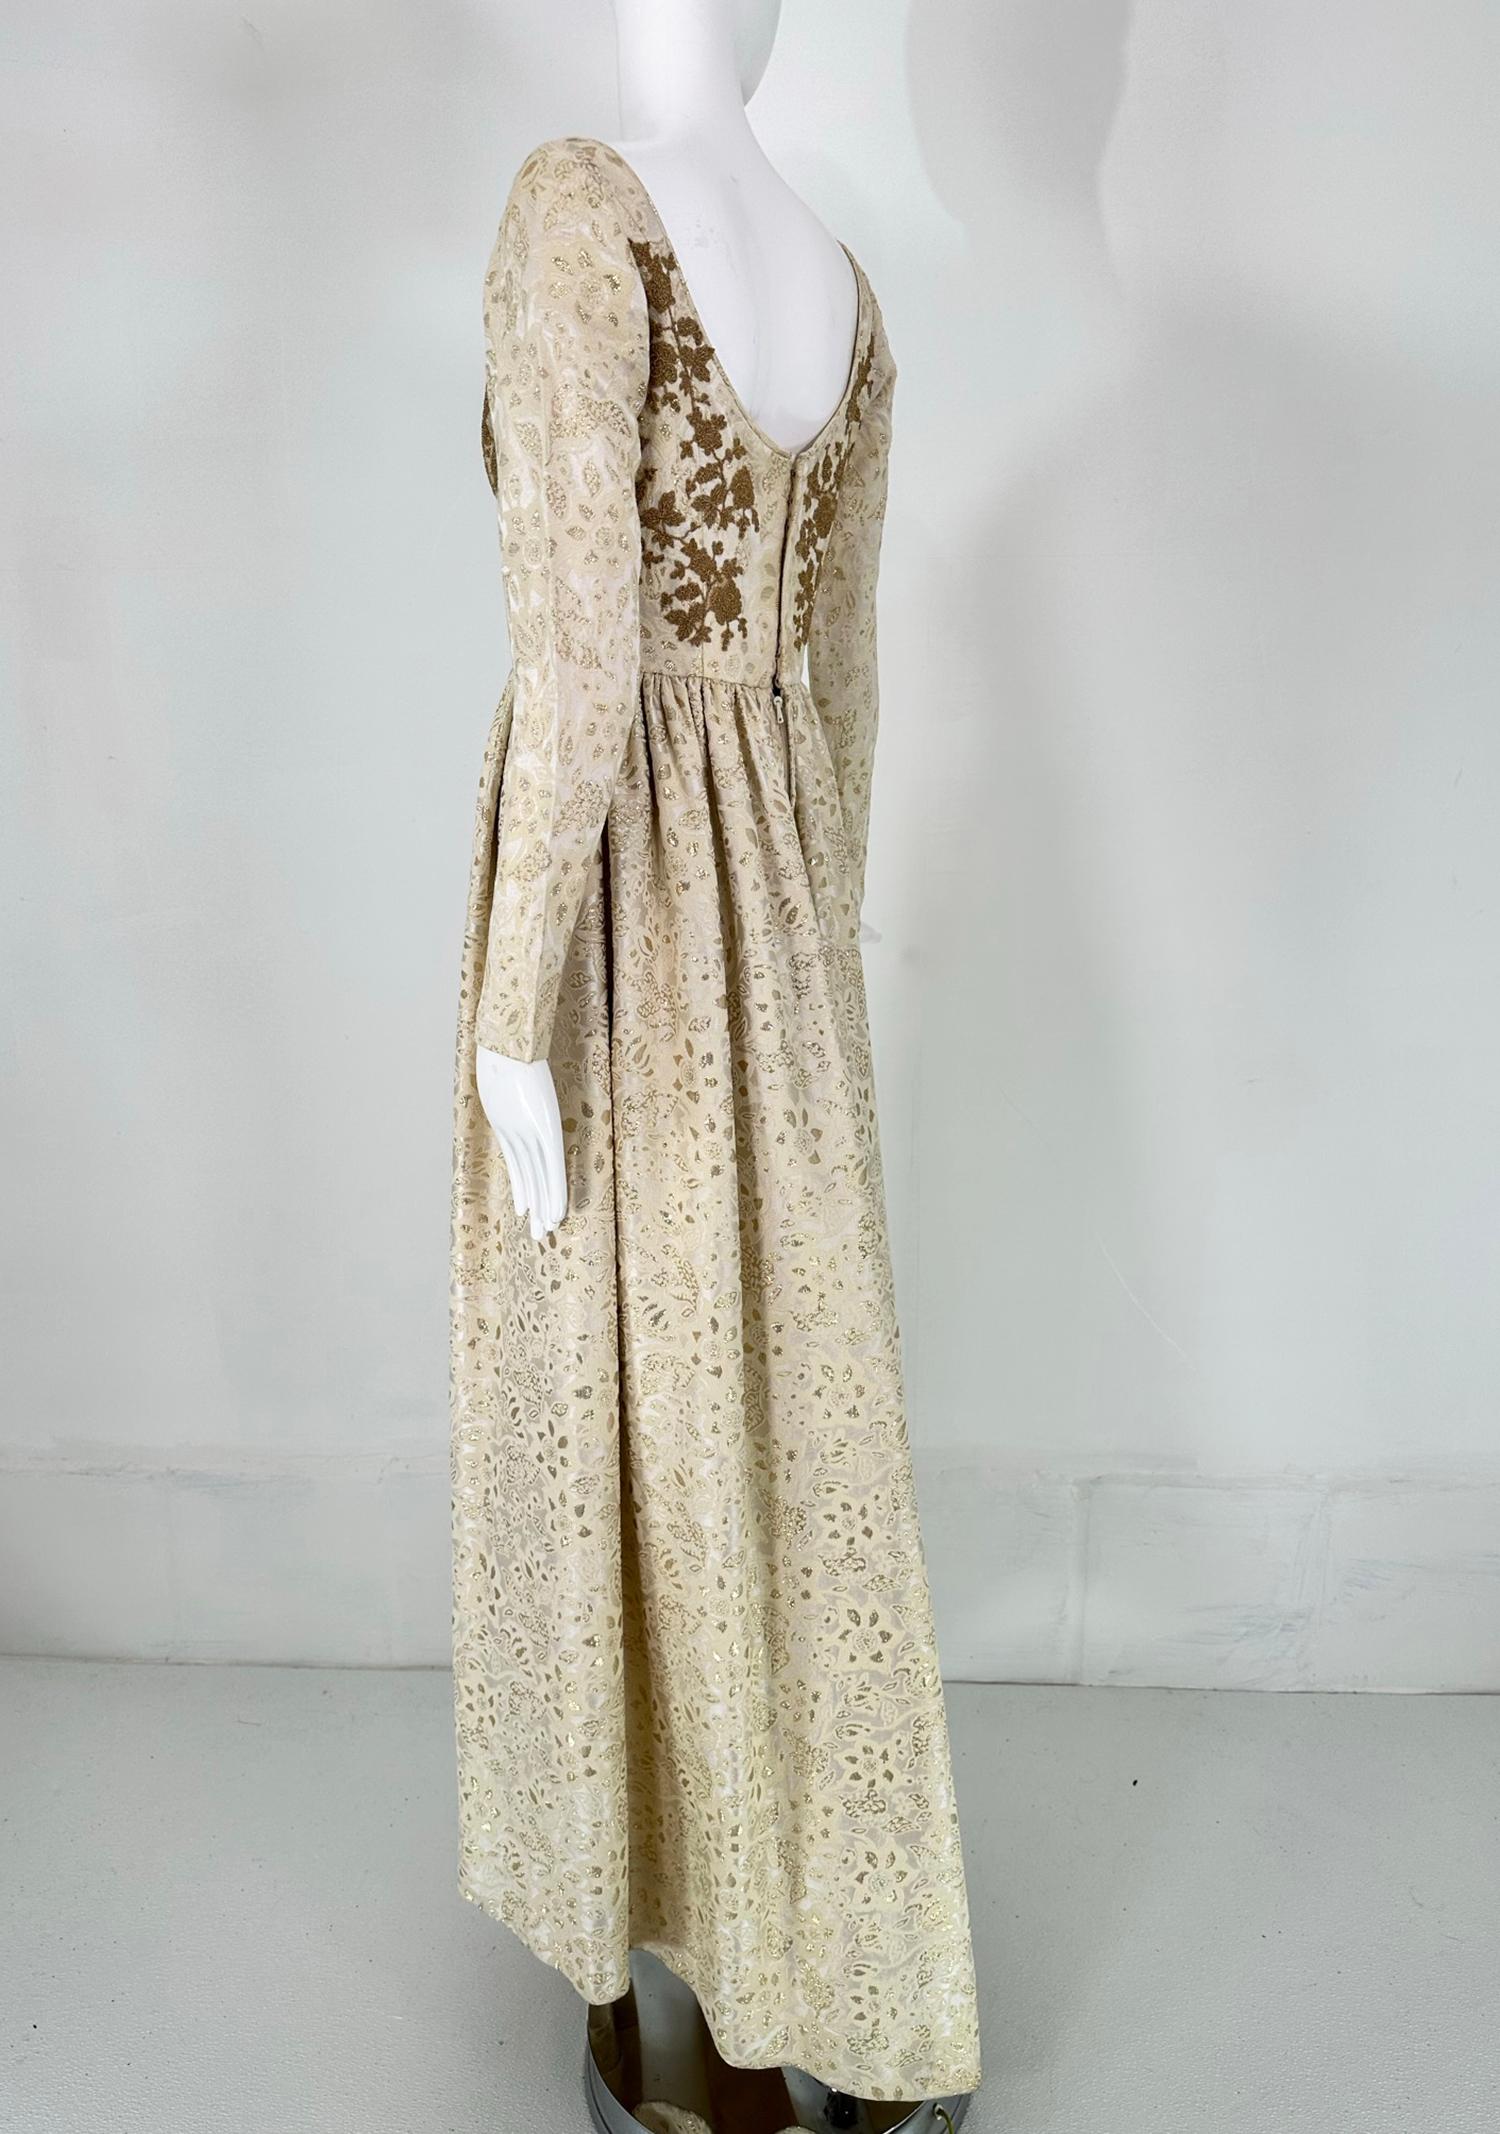 Galitizne Couture Renaissance Style Gown in Cream & Gold Metallic Brocade 1970s For Sale 6